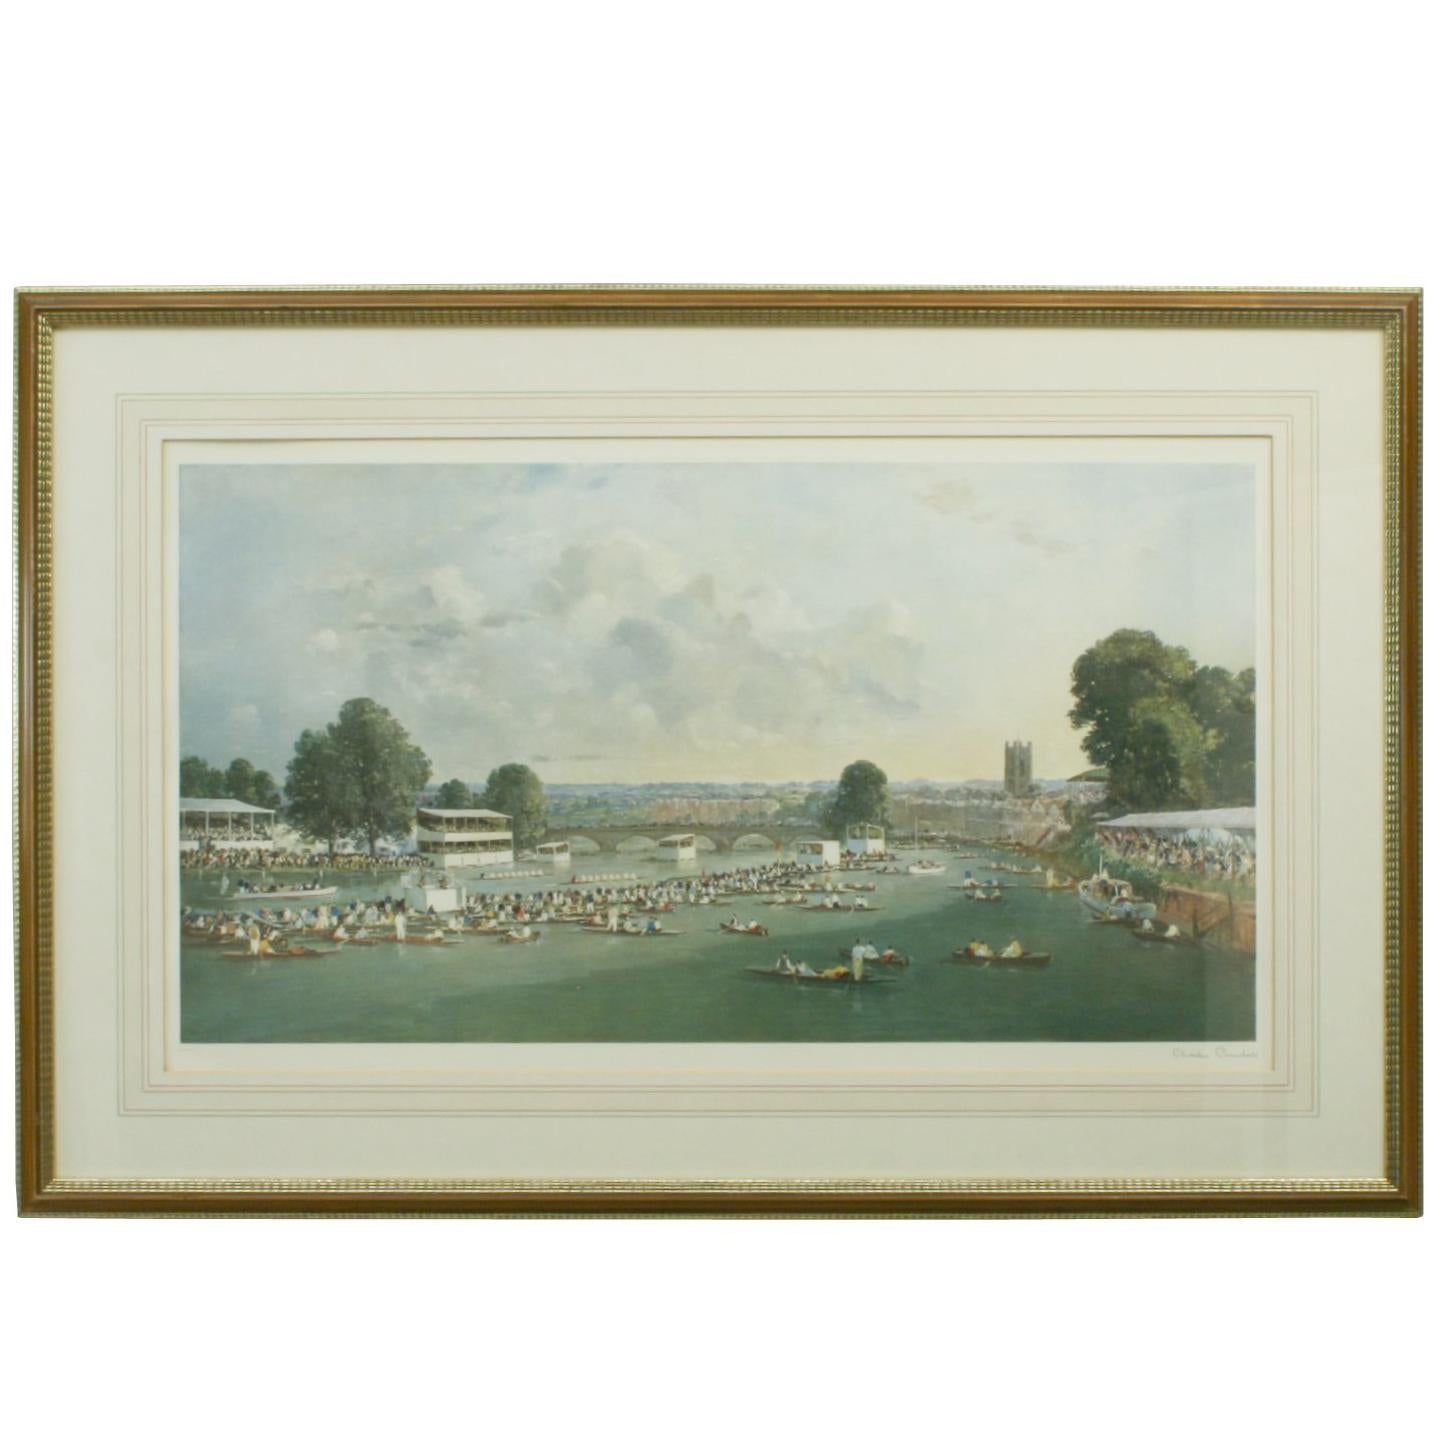 Henley Royal Regatta by Charles Cundall